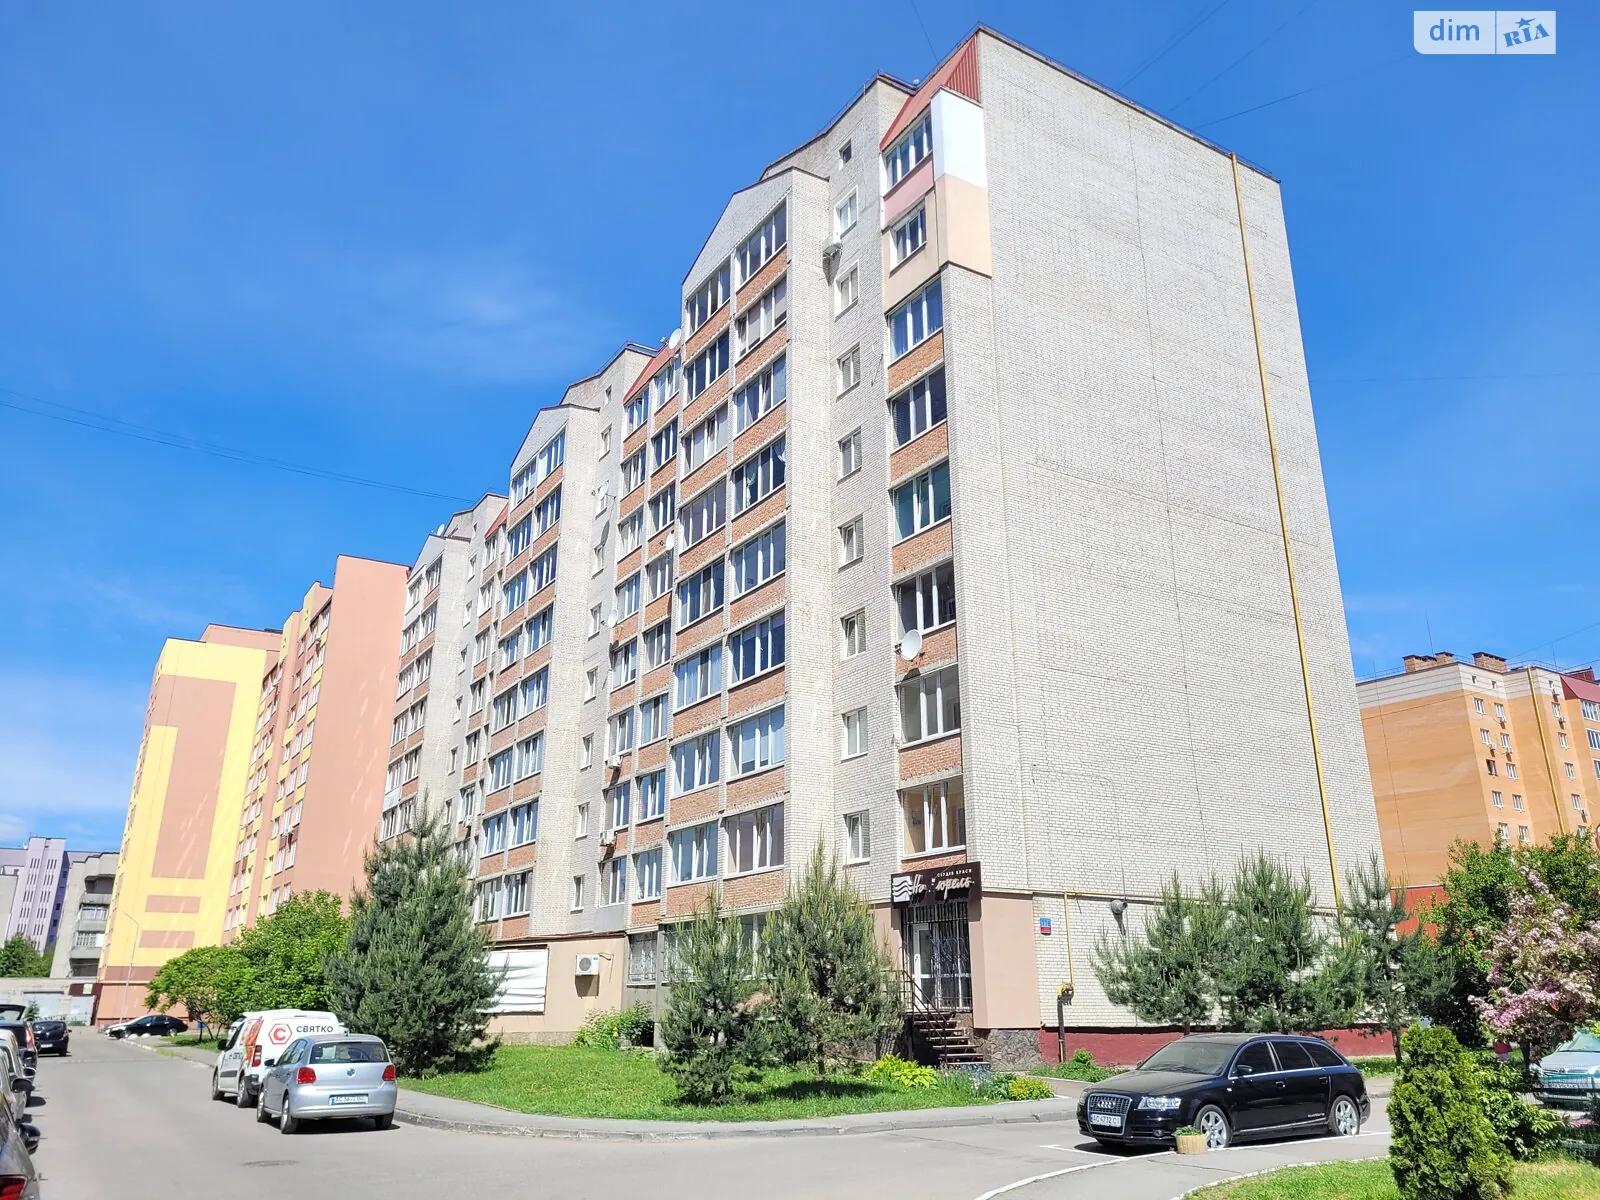 2-кімнатна квартира 72.2 кв. м у Луцьку, вул. Кравчука - фото 1